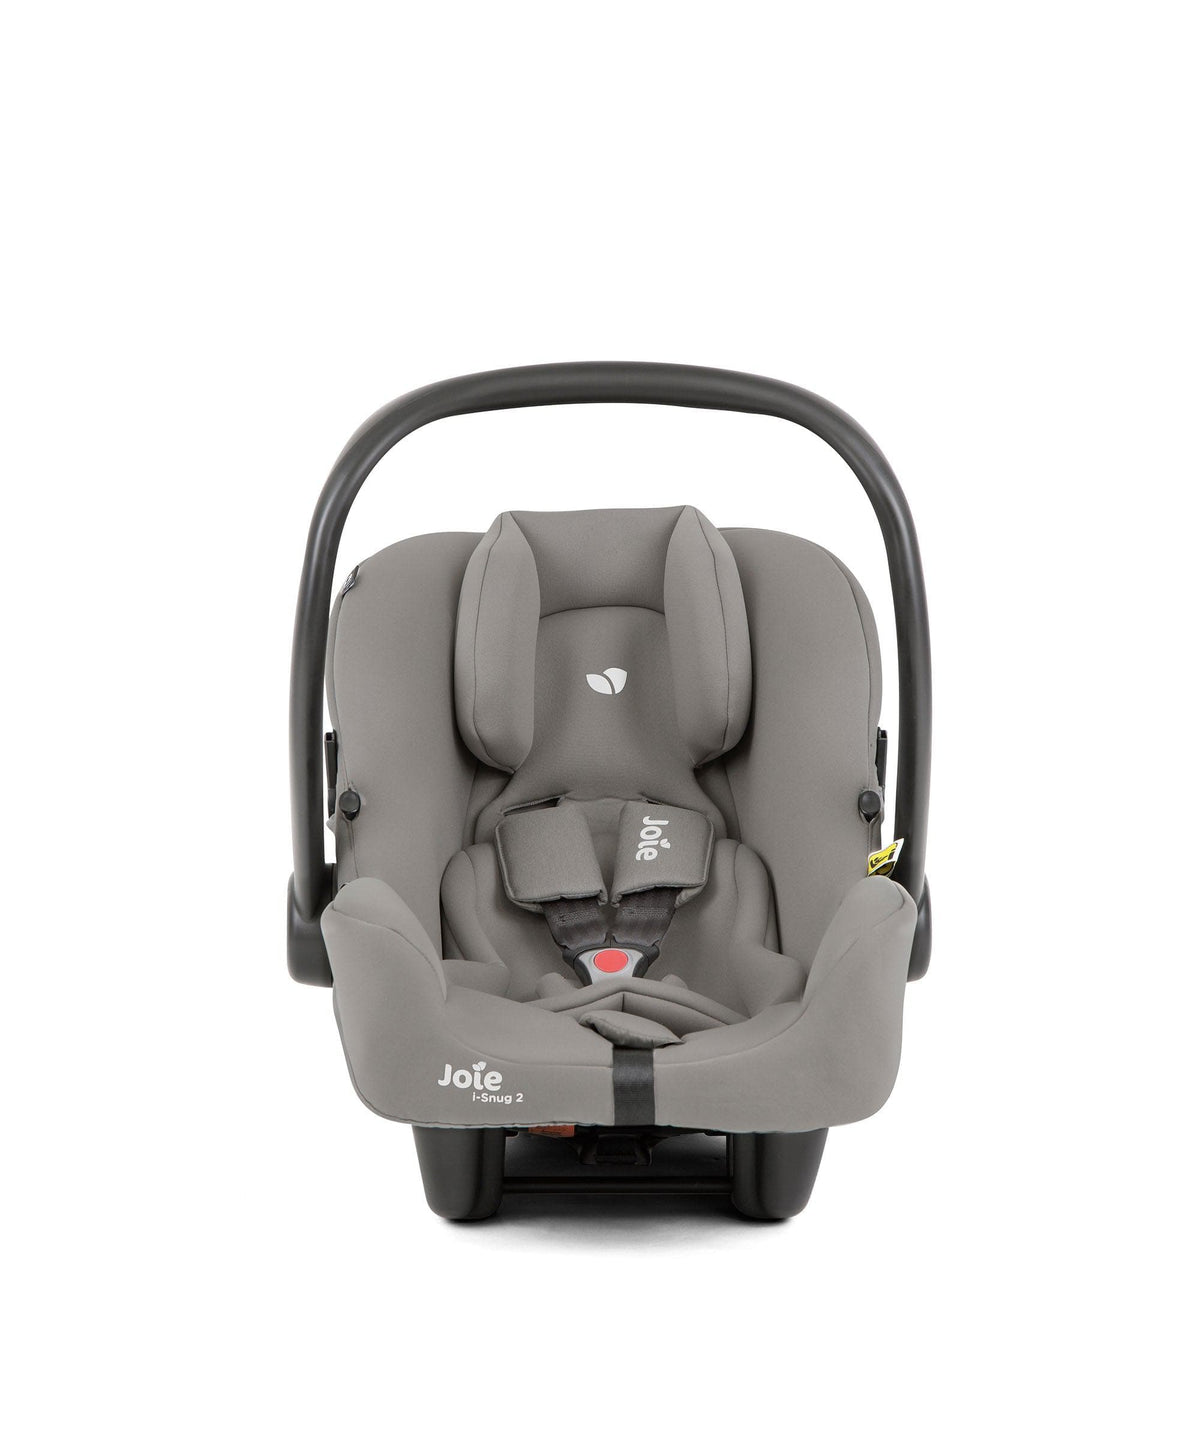 Joie i-Snug 2™ Car Seat - Pebble | Car Seats - Mamas & Papas UK